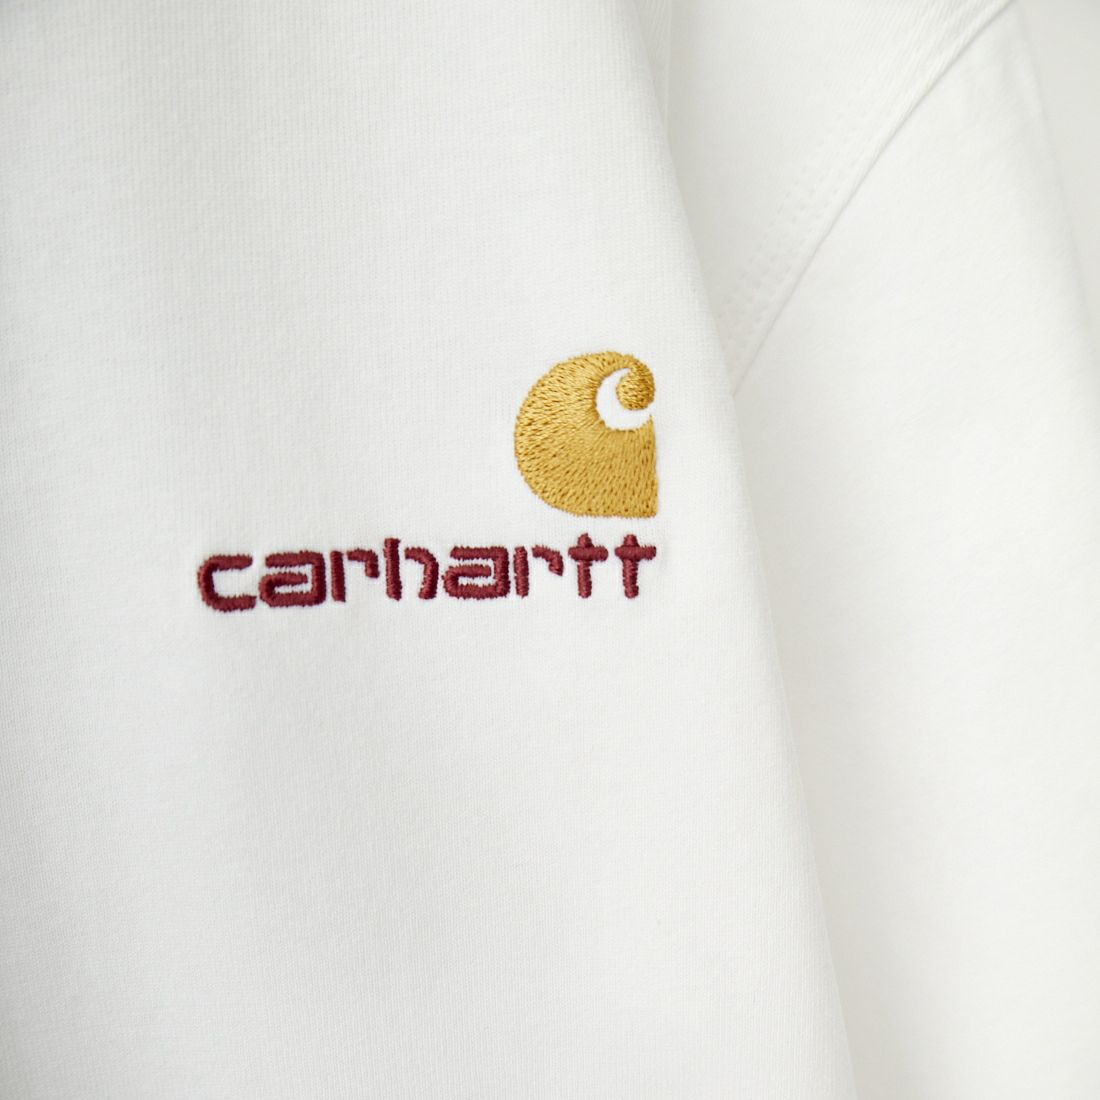 carhartt WIP [カーハートダブリューアイピー] ショートスリーブアメリカンスクリプトTシャツ [I029956]